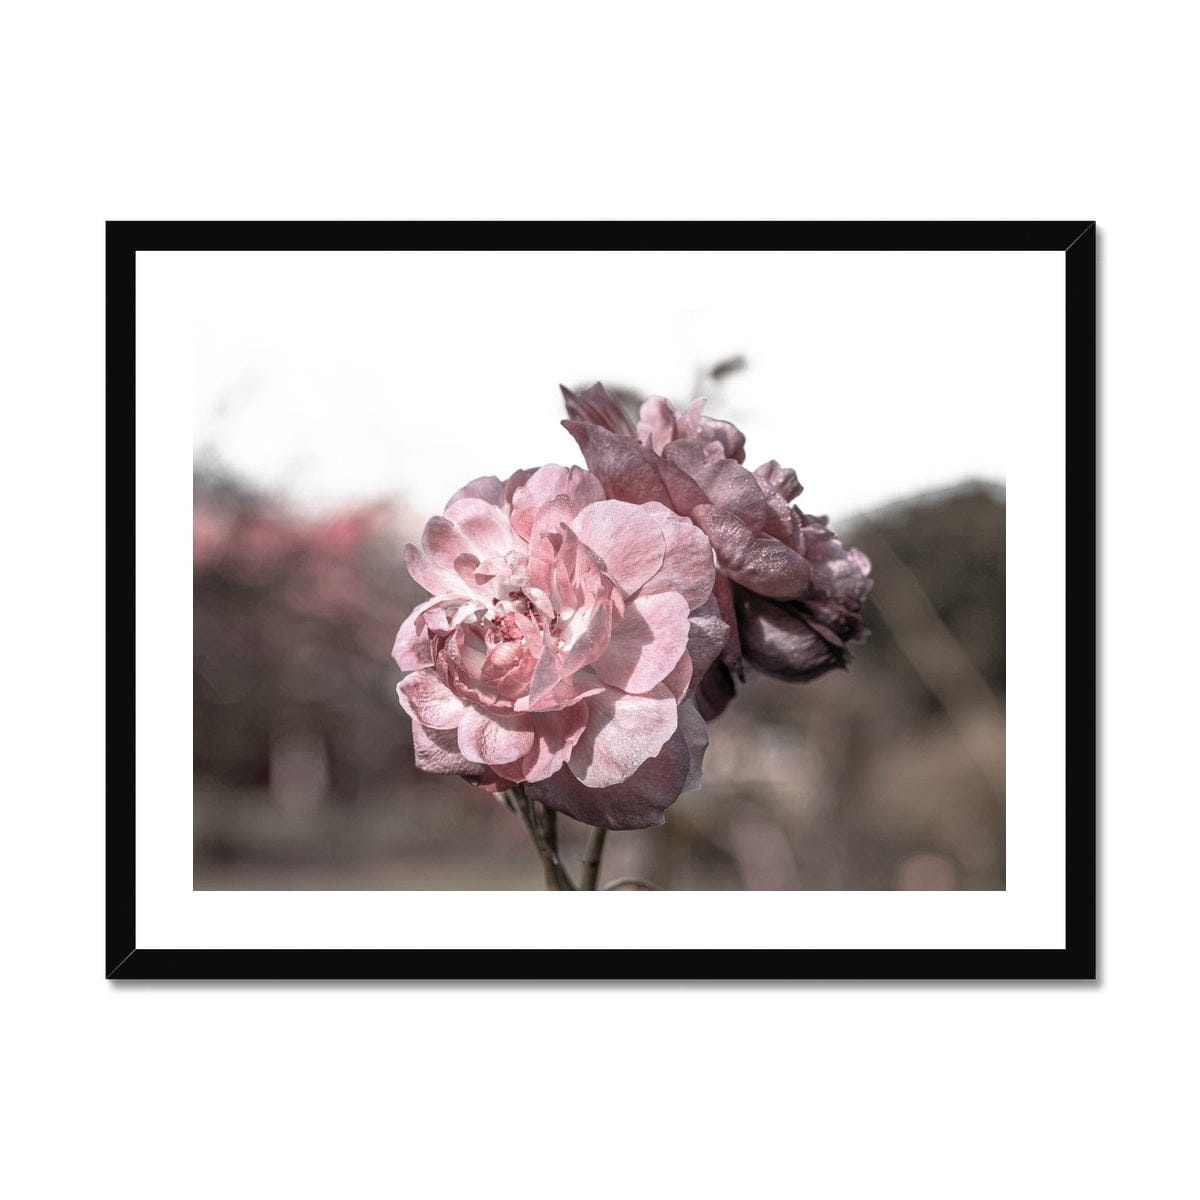 Adam Davies Framed A4 Landscape (29x21cm) / Black Frame Botanical Gardens Pink Camelia Framed Print